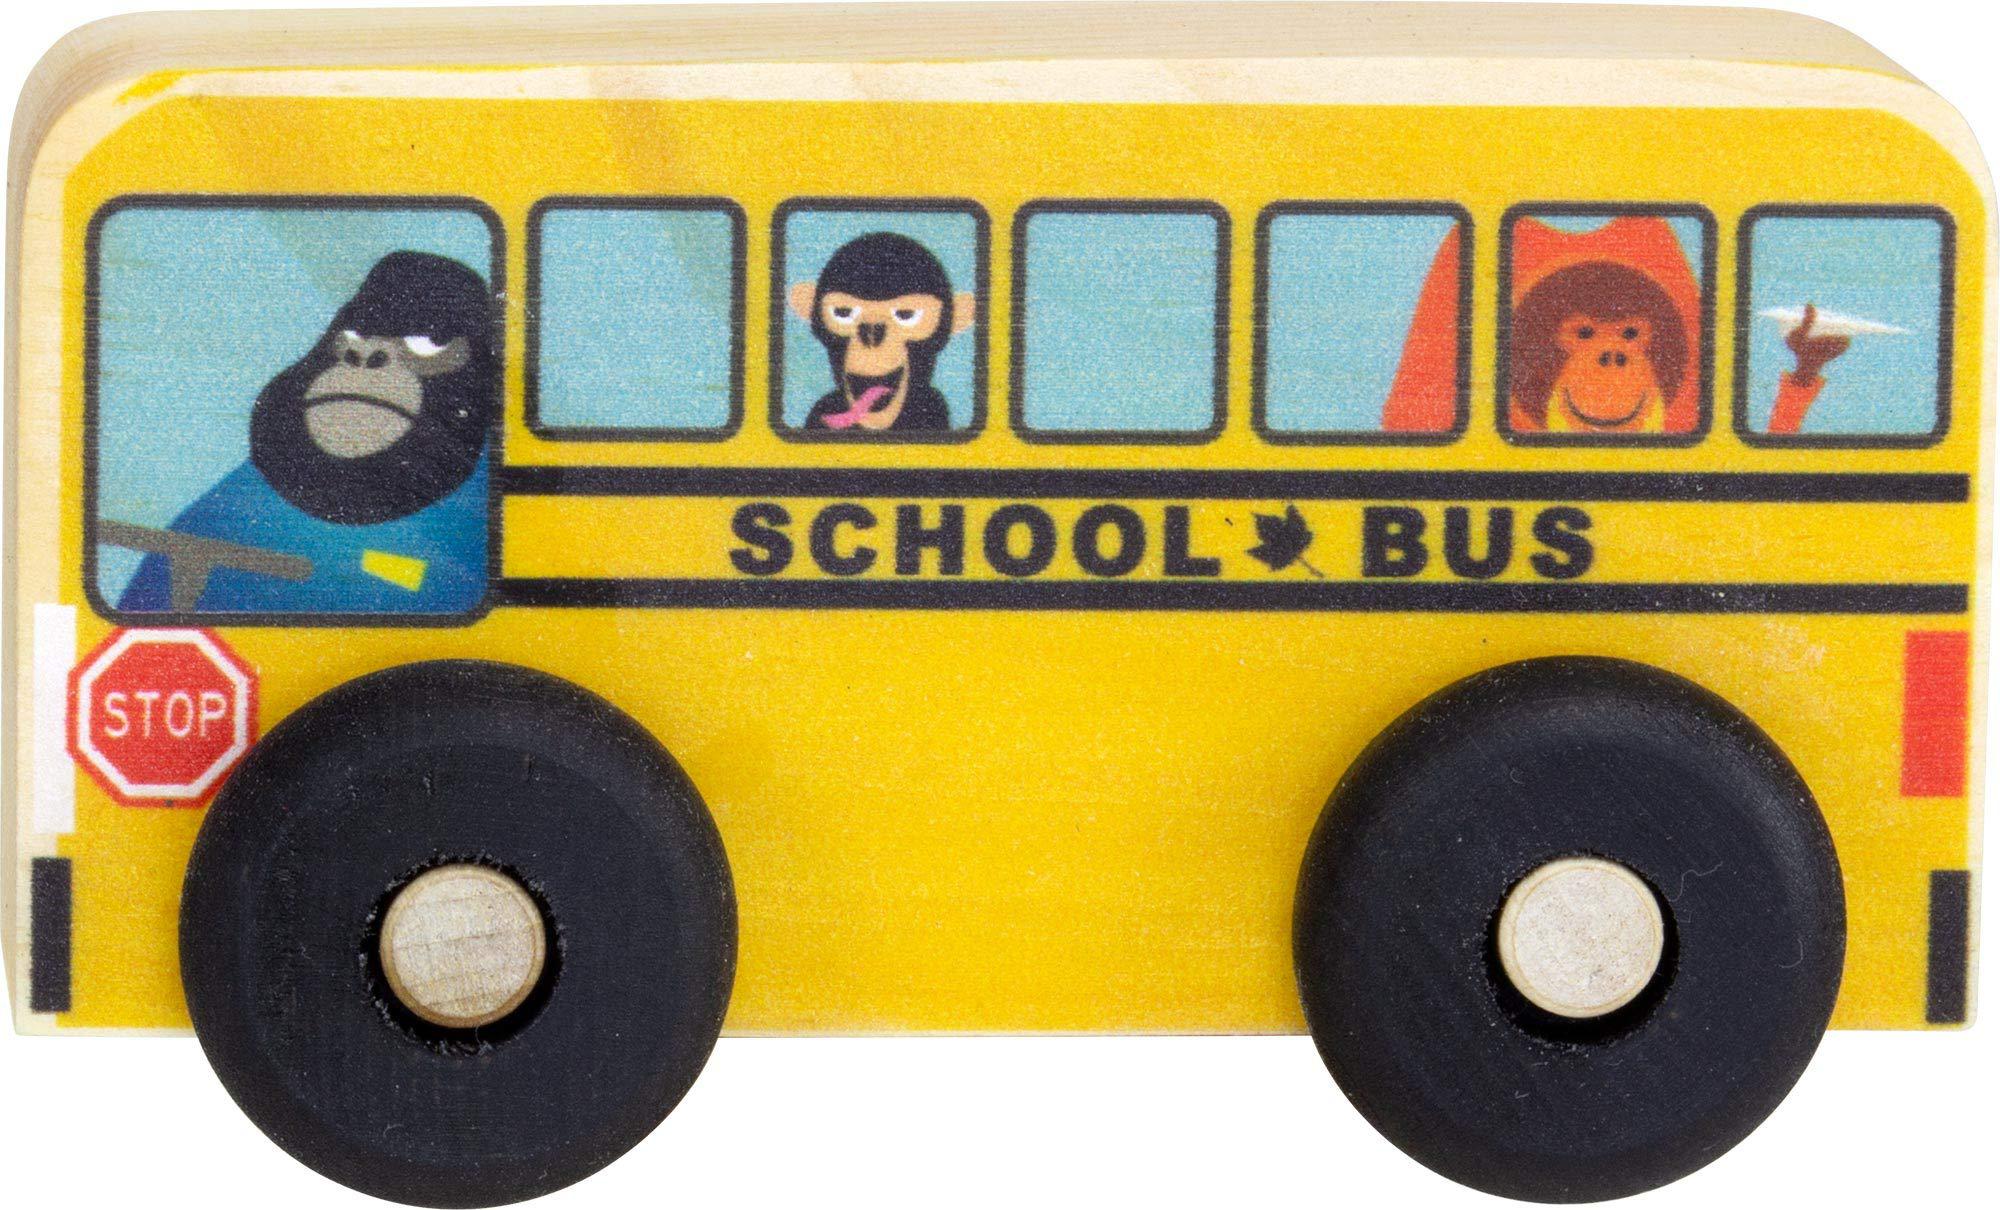 Maple Landmark scoots-school bus - made in usa